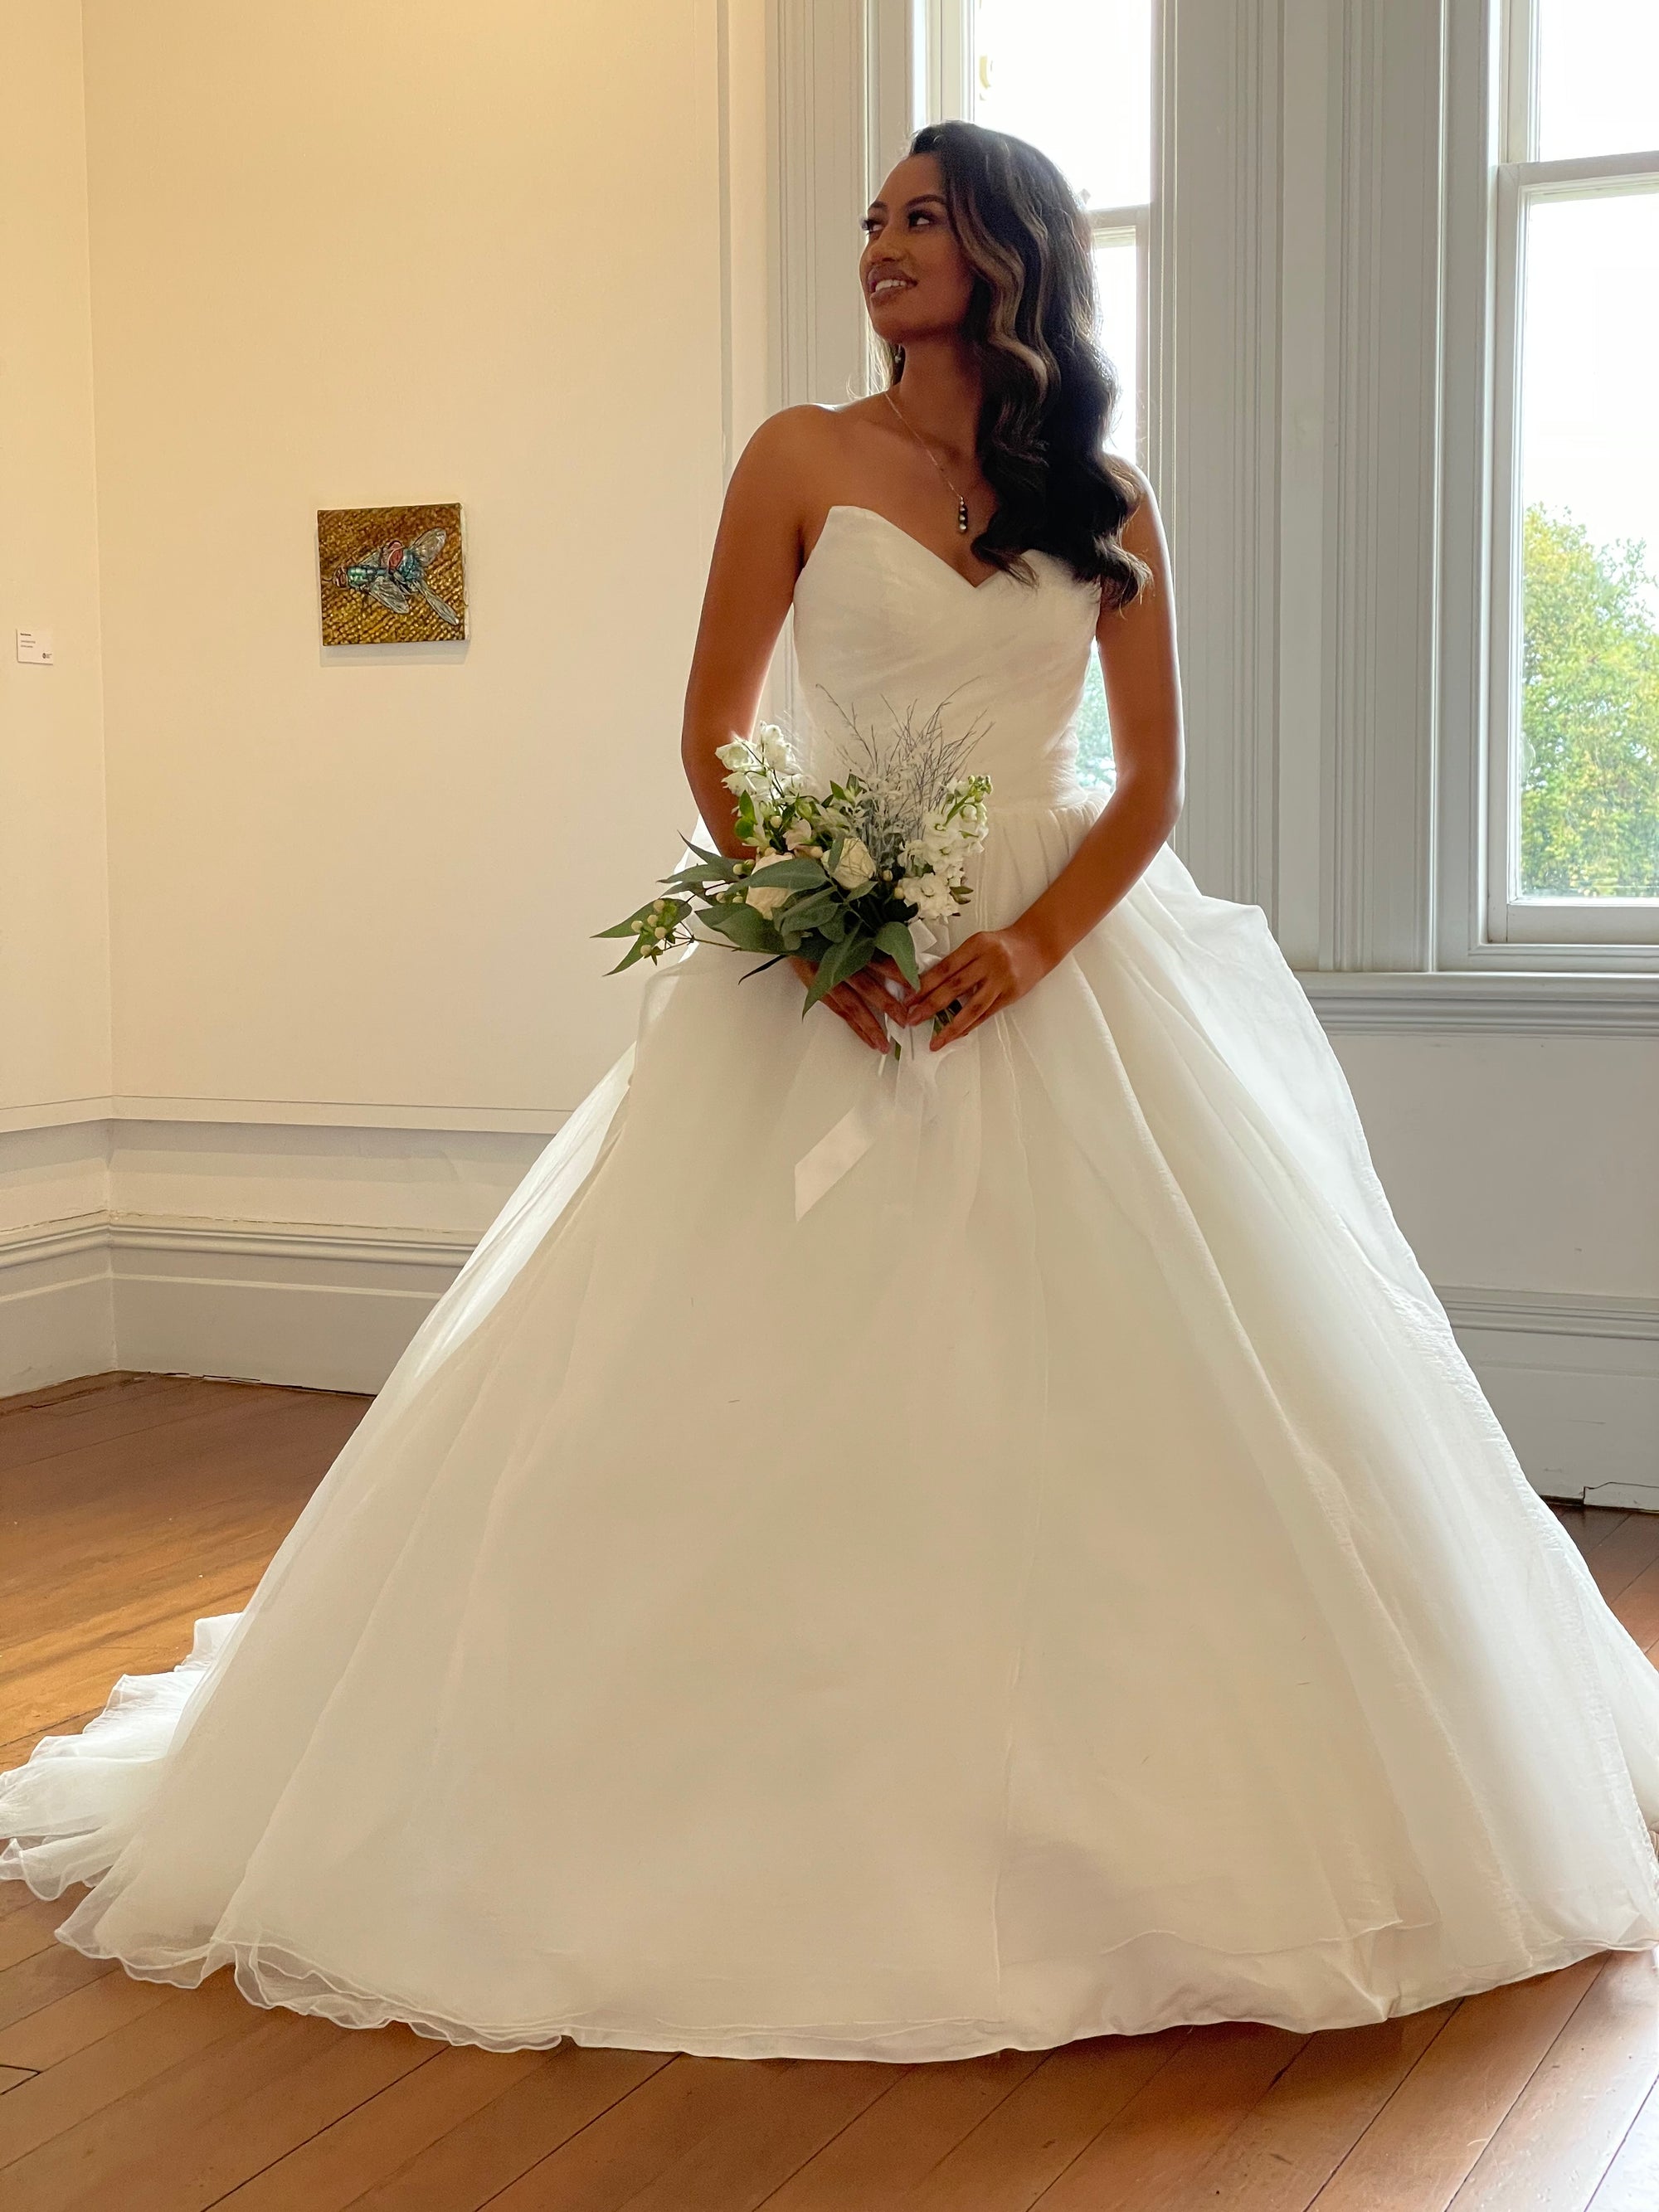 Clementine Wedding Dress - Wedding She Wrote